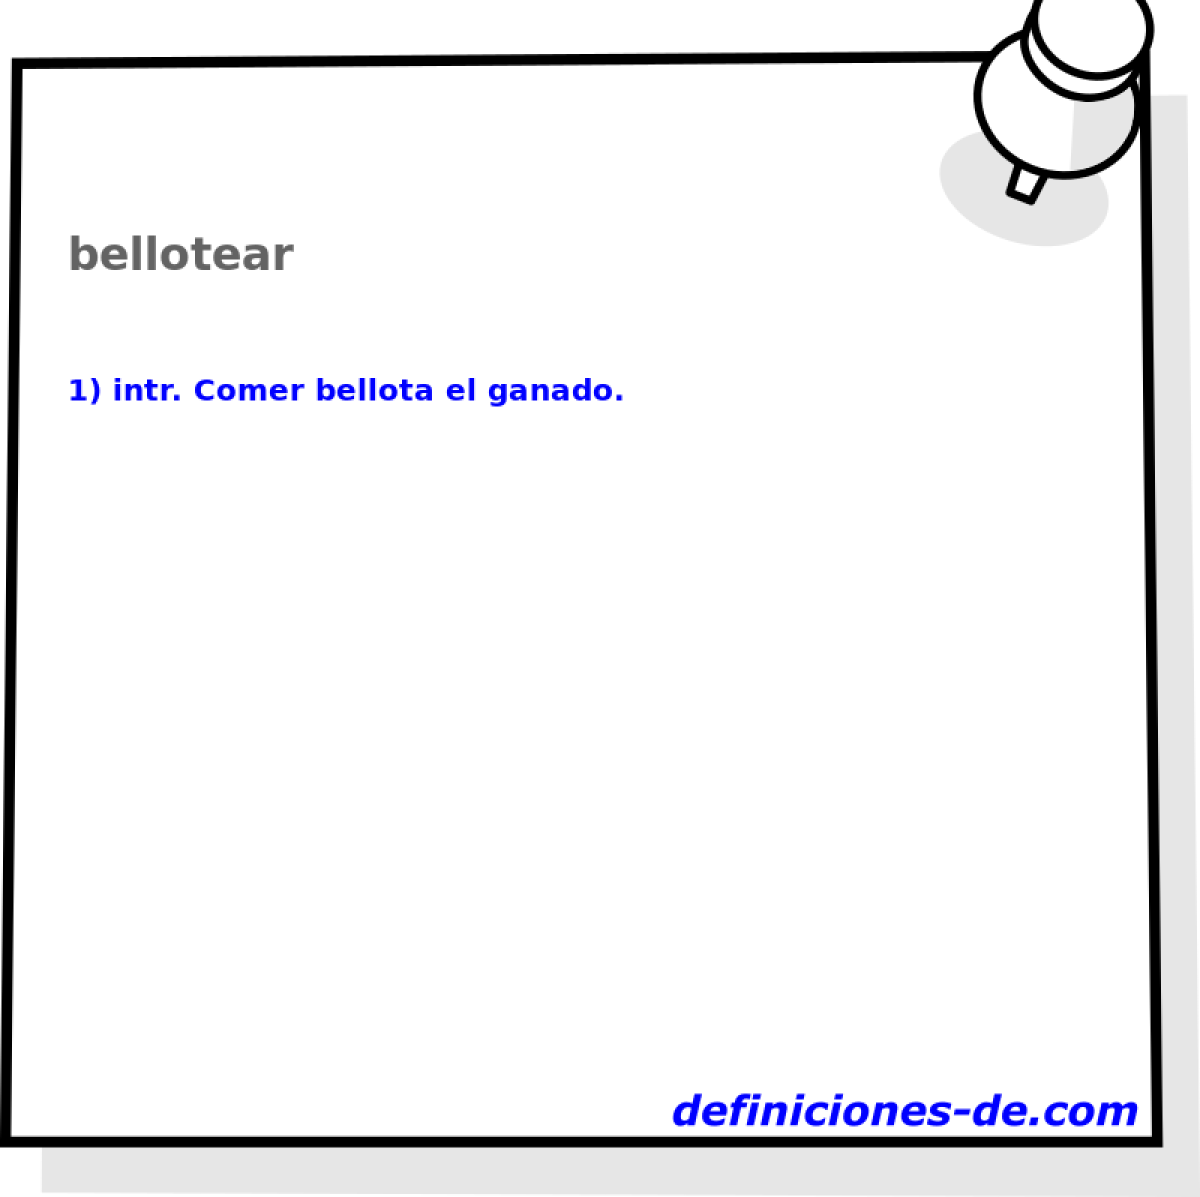 bellotear 